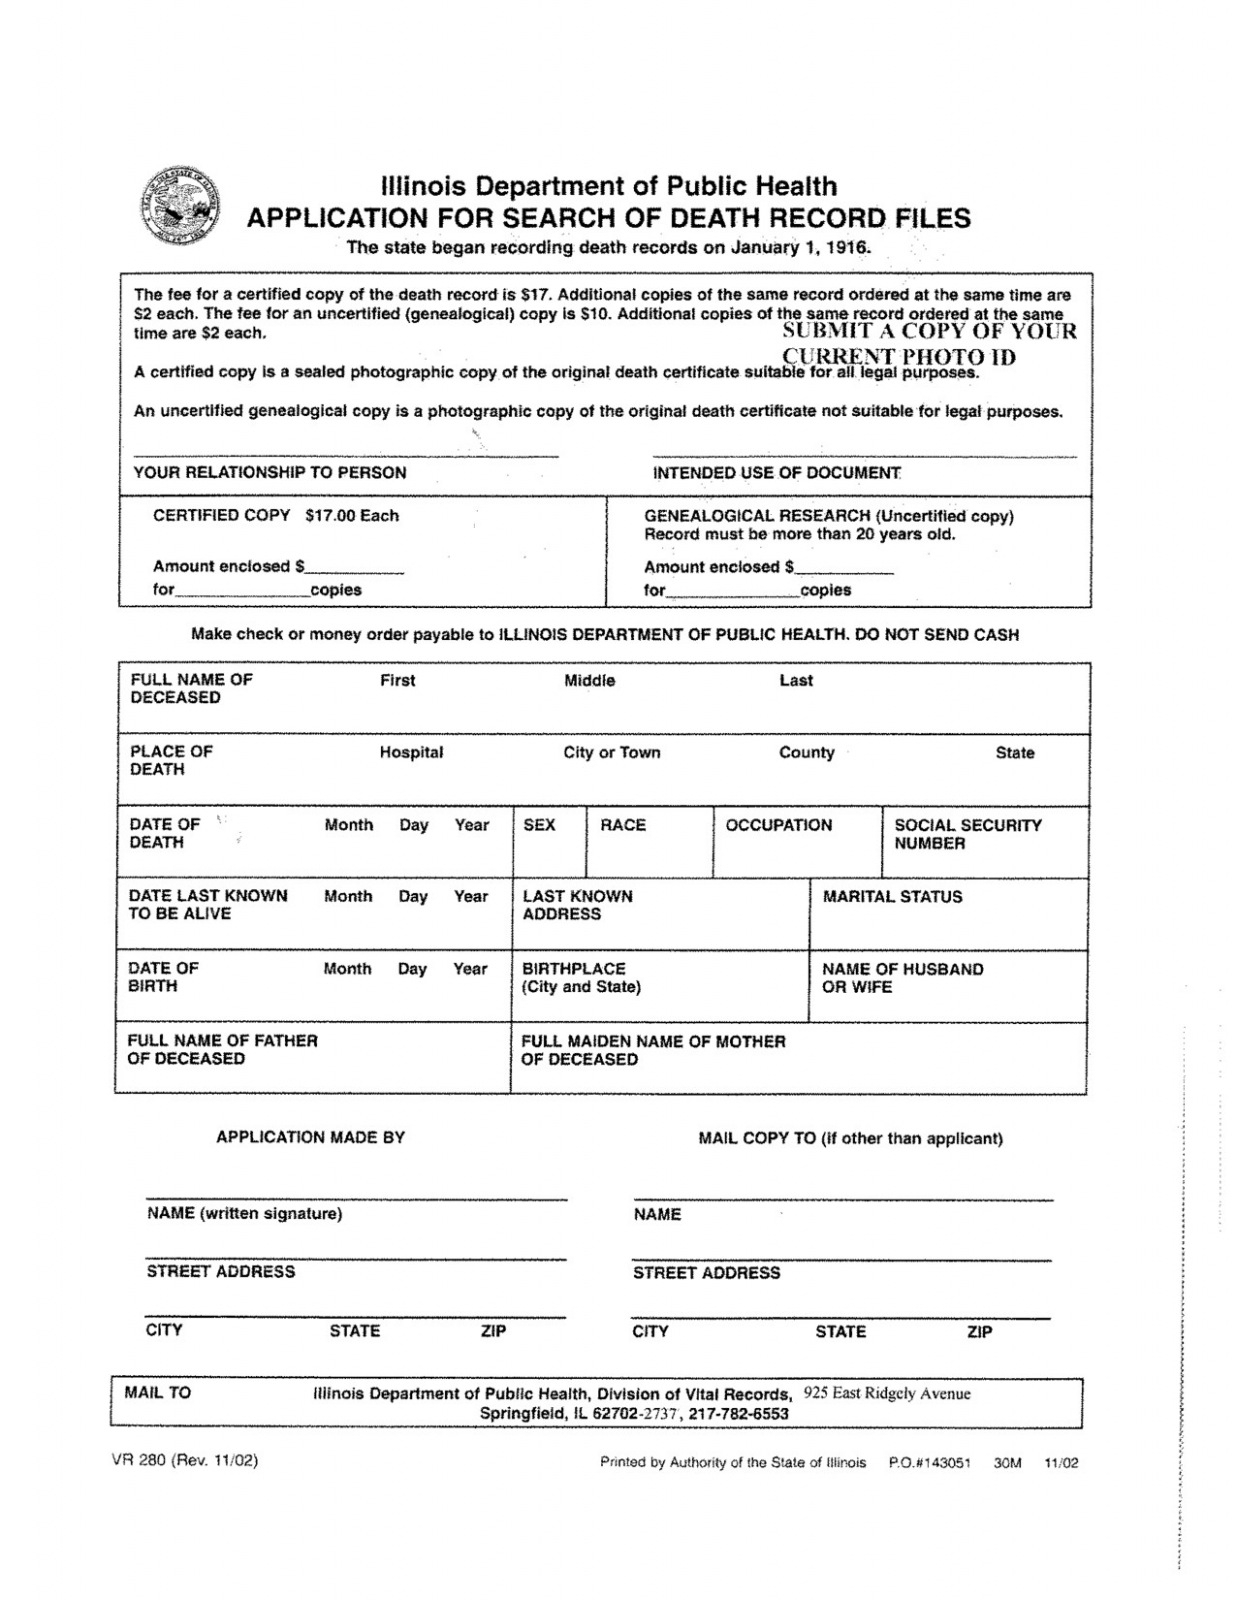 Death Certificate Translation Template Spanish To English Regarding Marriage Certificate Translation Template